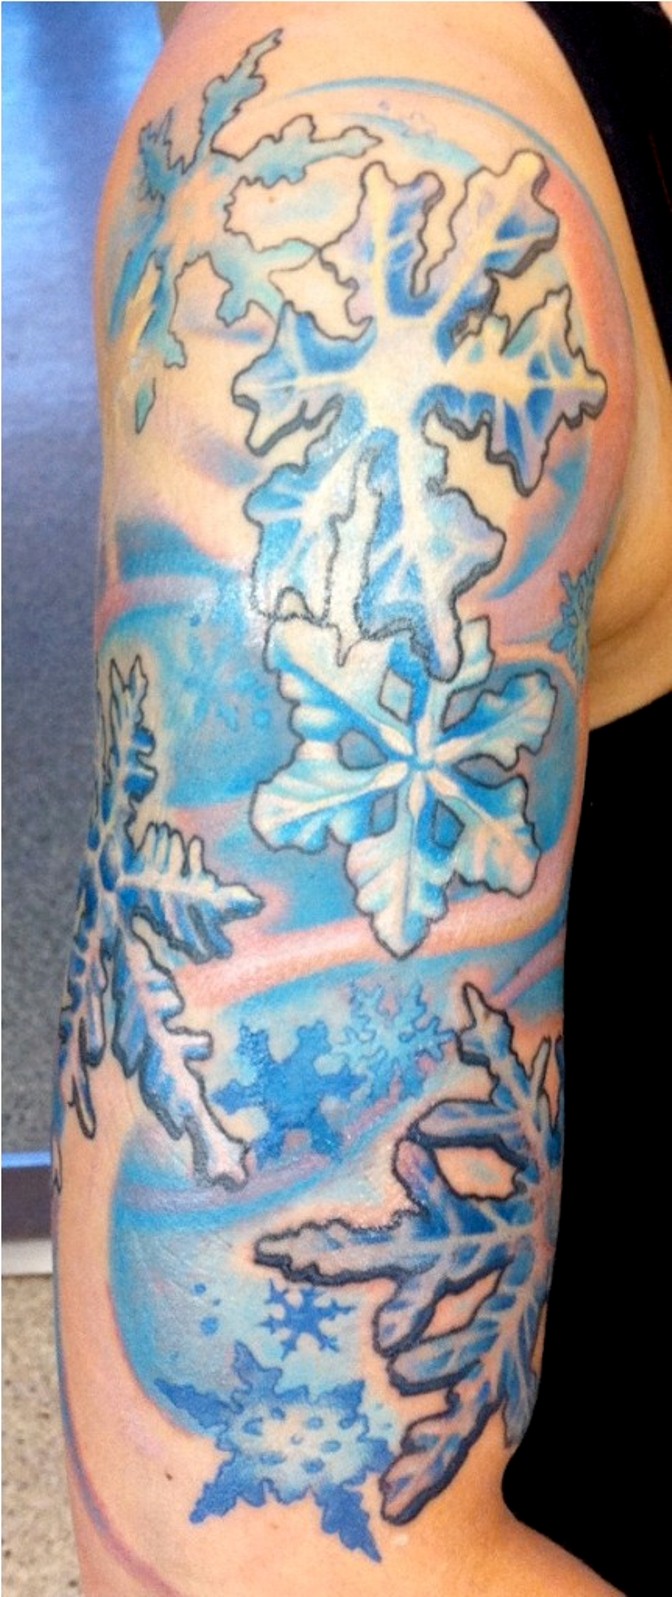 Small minimalist snowflake temporary tattoo (photo by